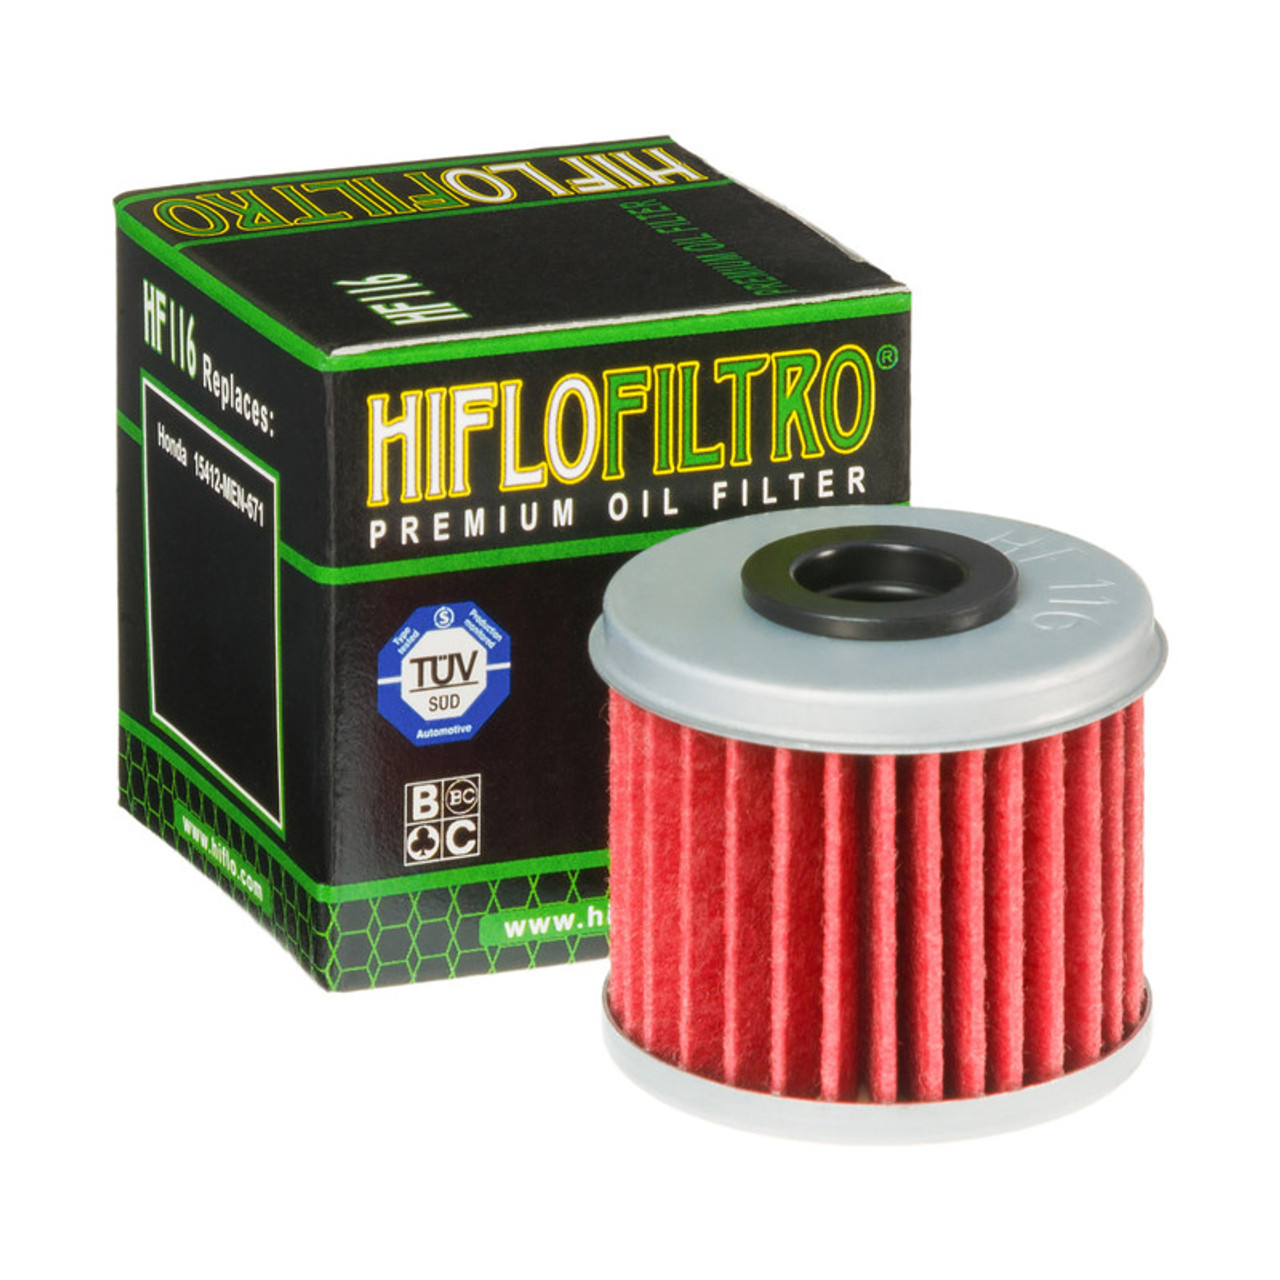 Hi-Flo HF116 Oil Filter